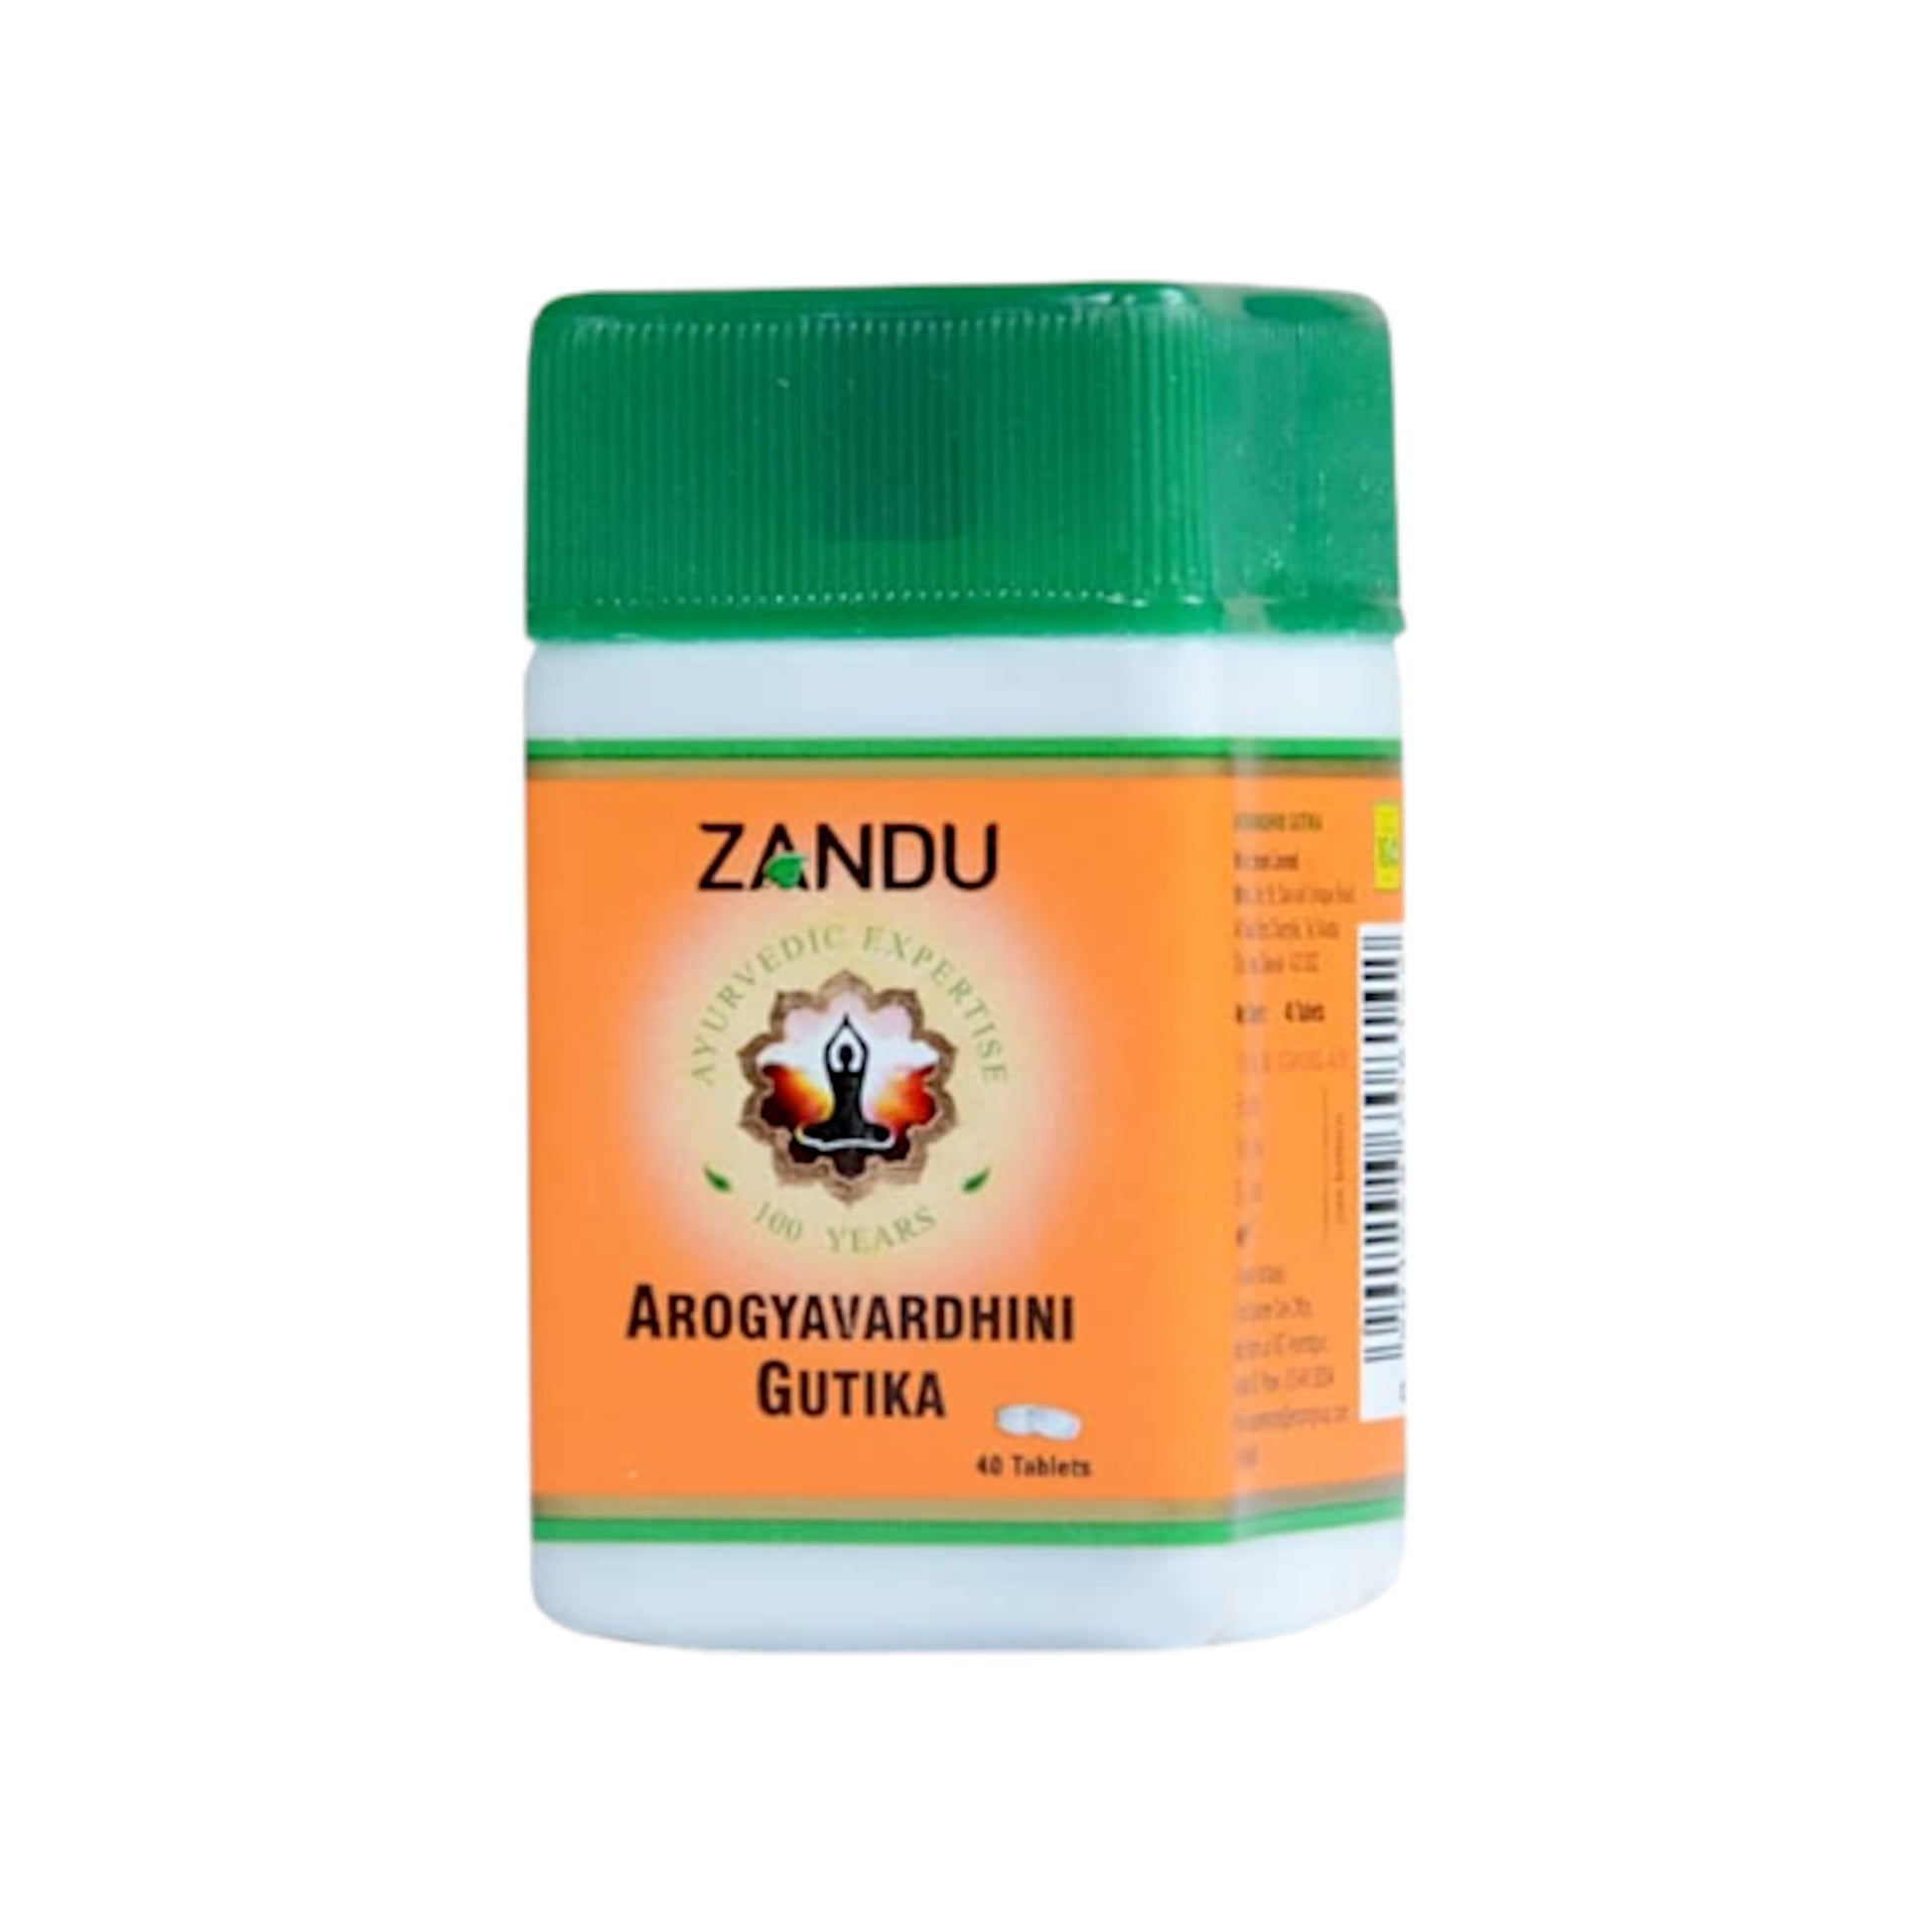 Image: Zandu Arogyavardhani Gutika 40 Tablets - Ayurvedic remedy for Skin and Blood Health.